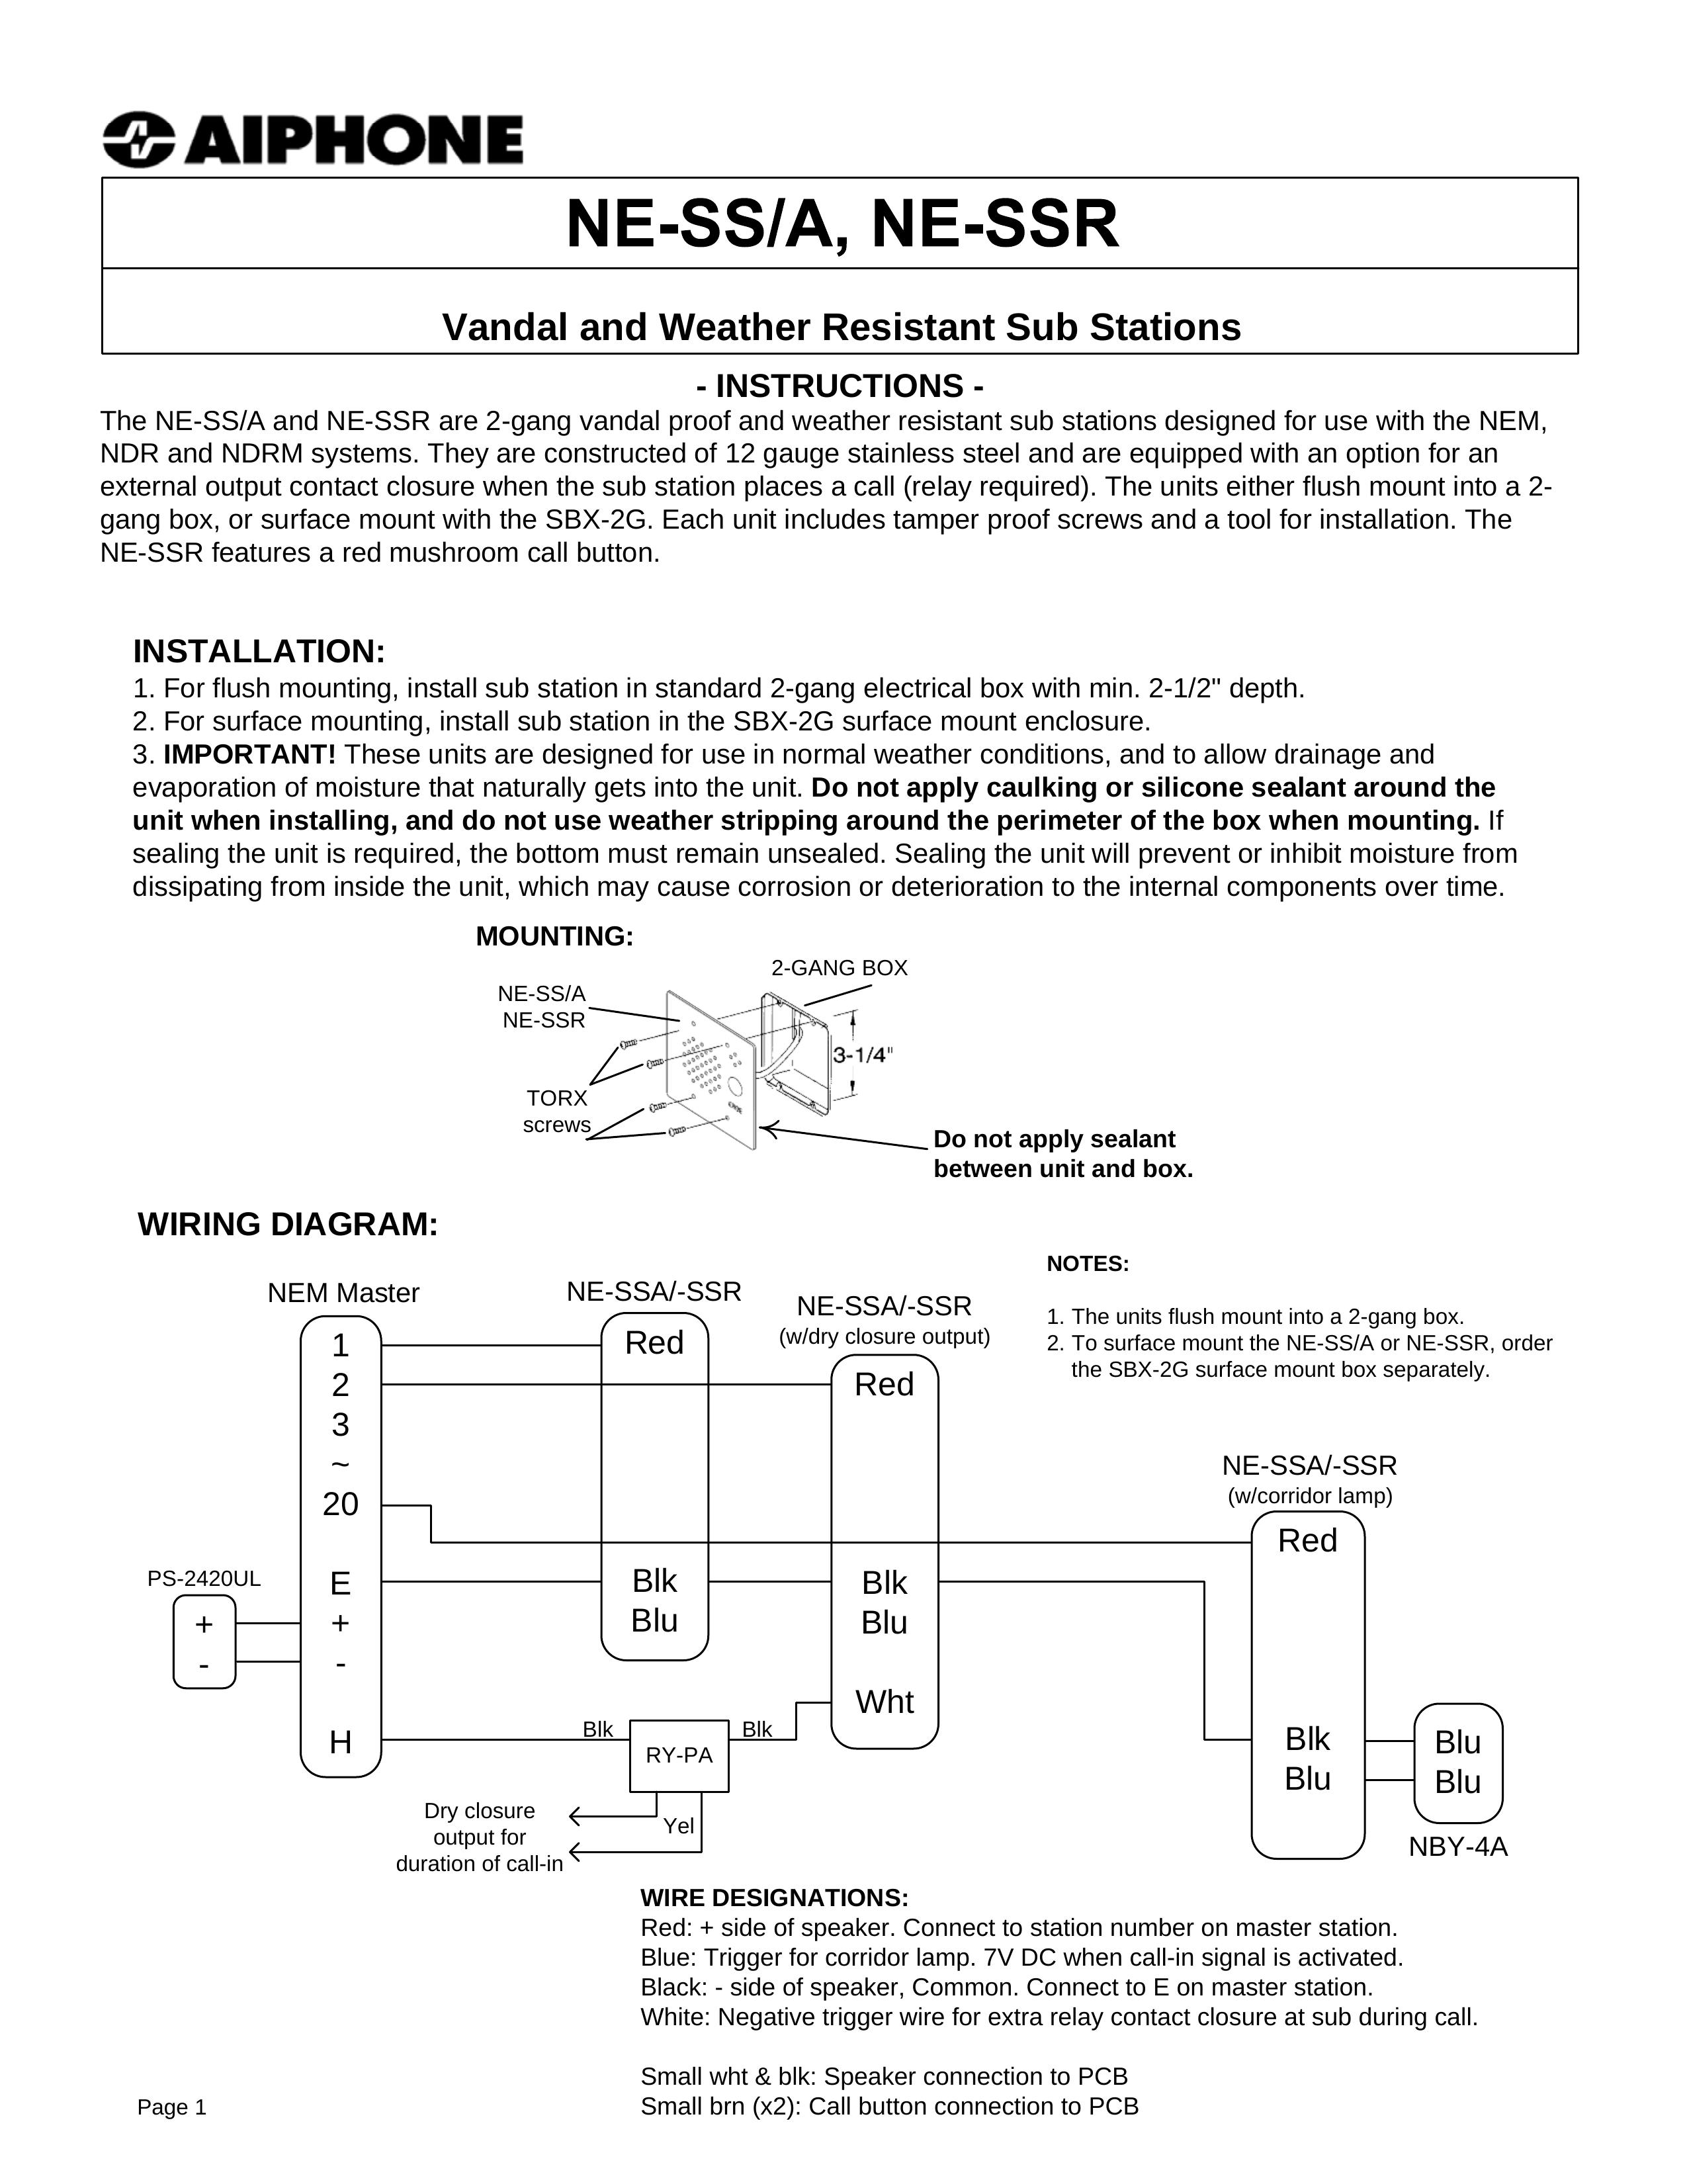 Aiphone NE-SS/A Marine Radio User Manual